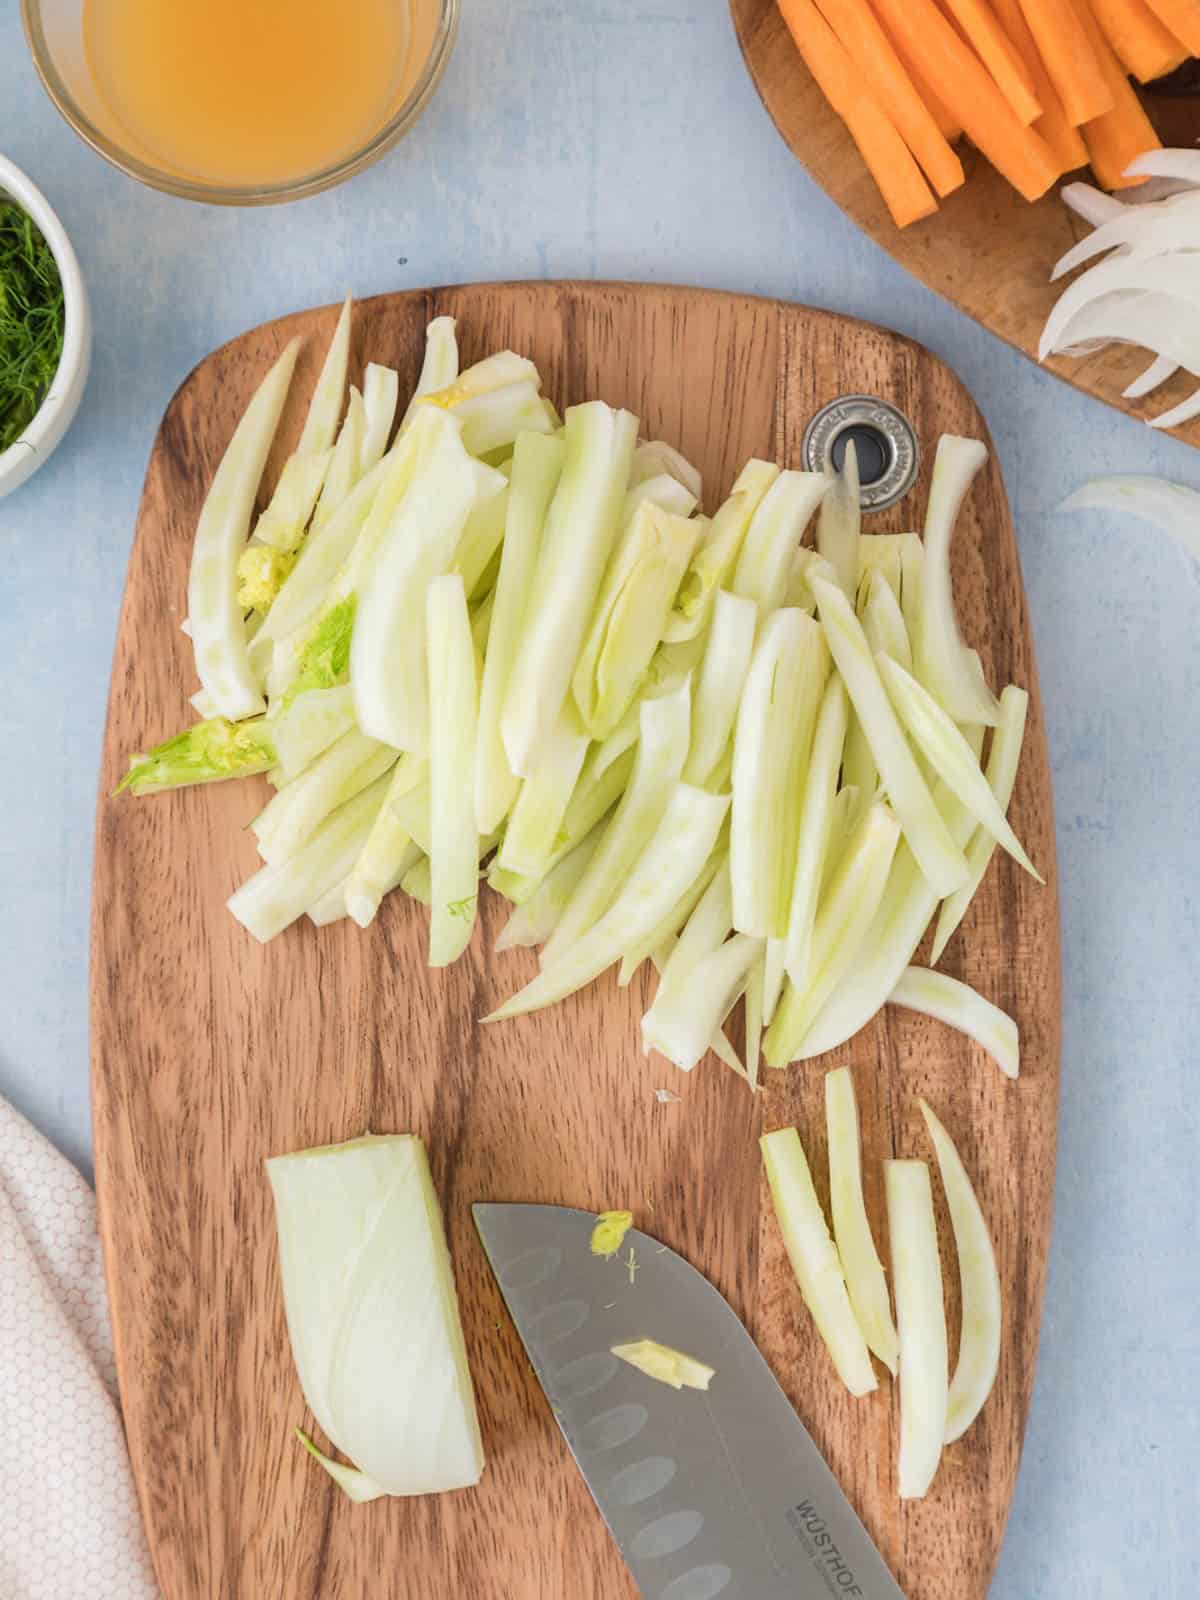 Julienne cut fennel on a cutting board.